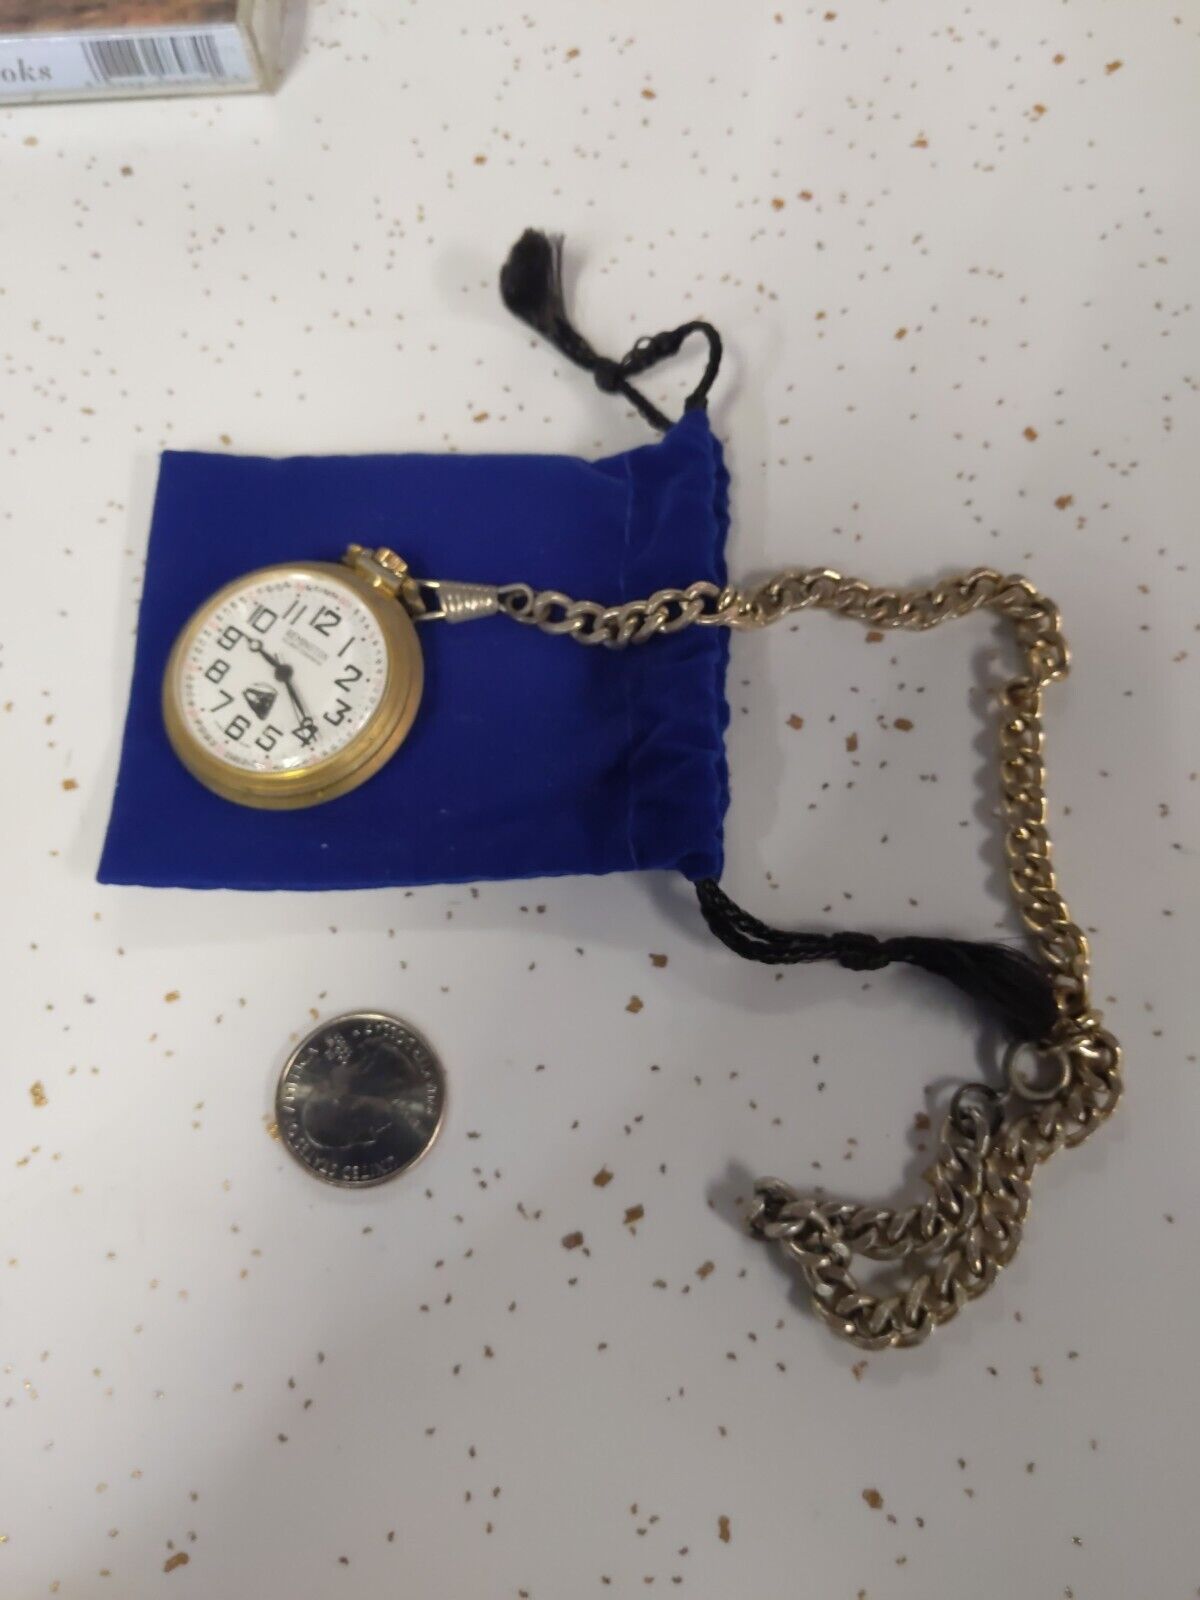 VTG Remington Quartzarama Silver Gold TONE Train Detail Pocket Watch With Chain